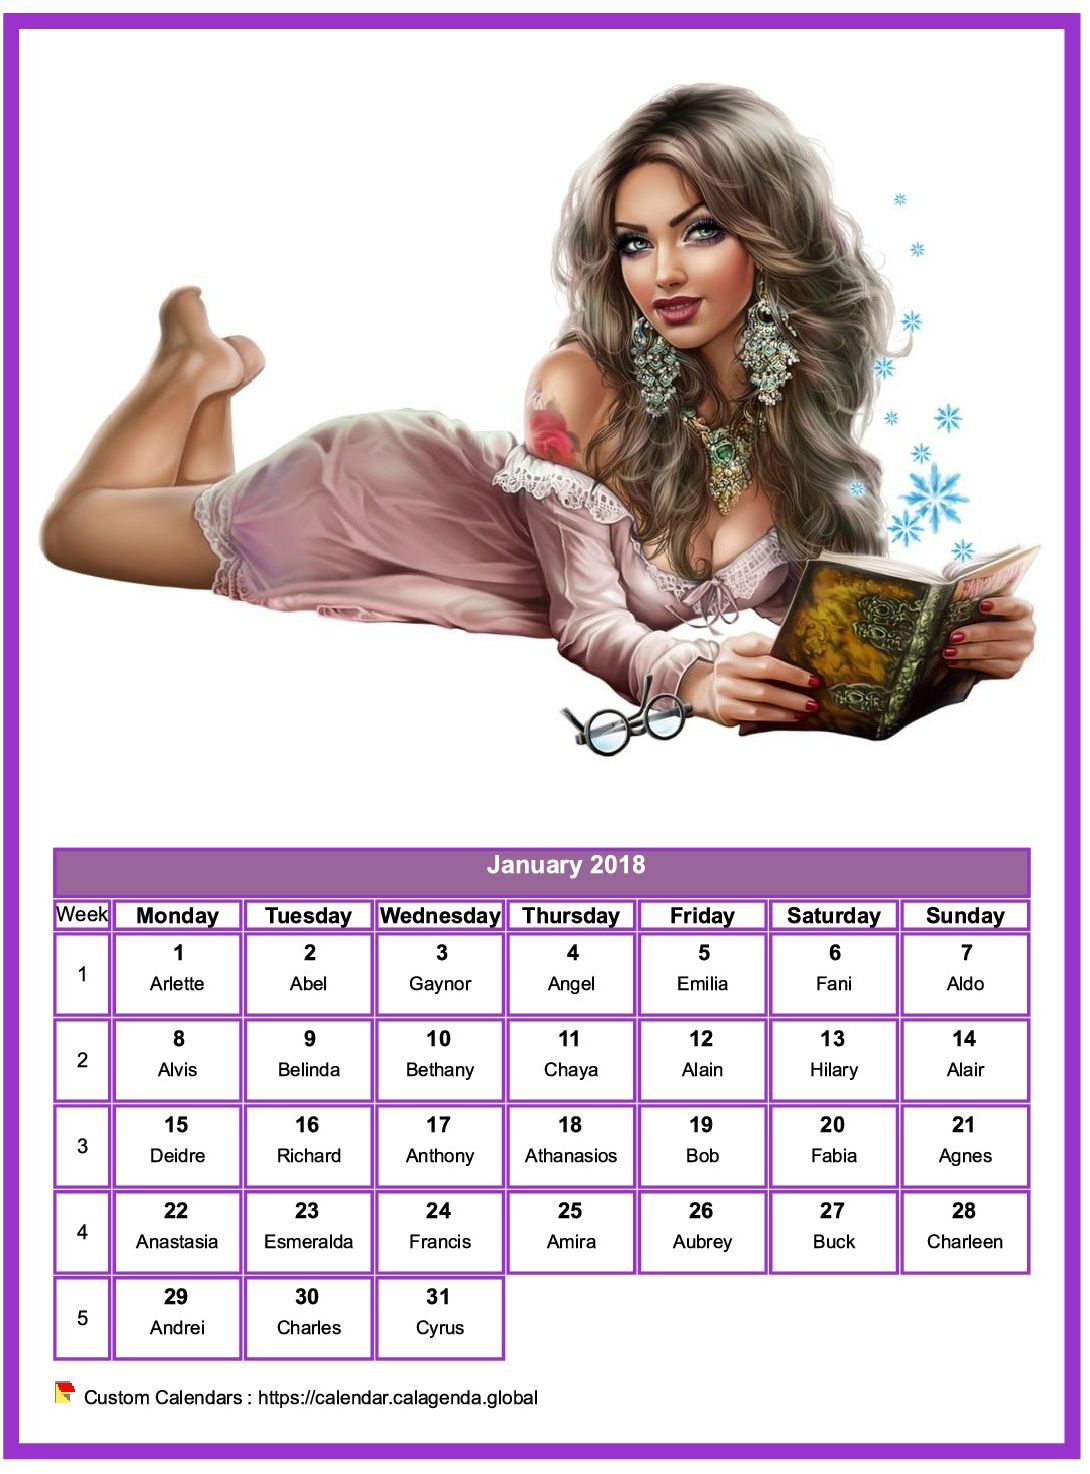 Calendar January 2018 women